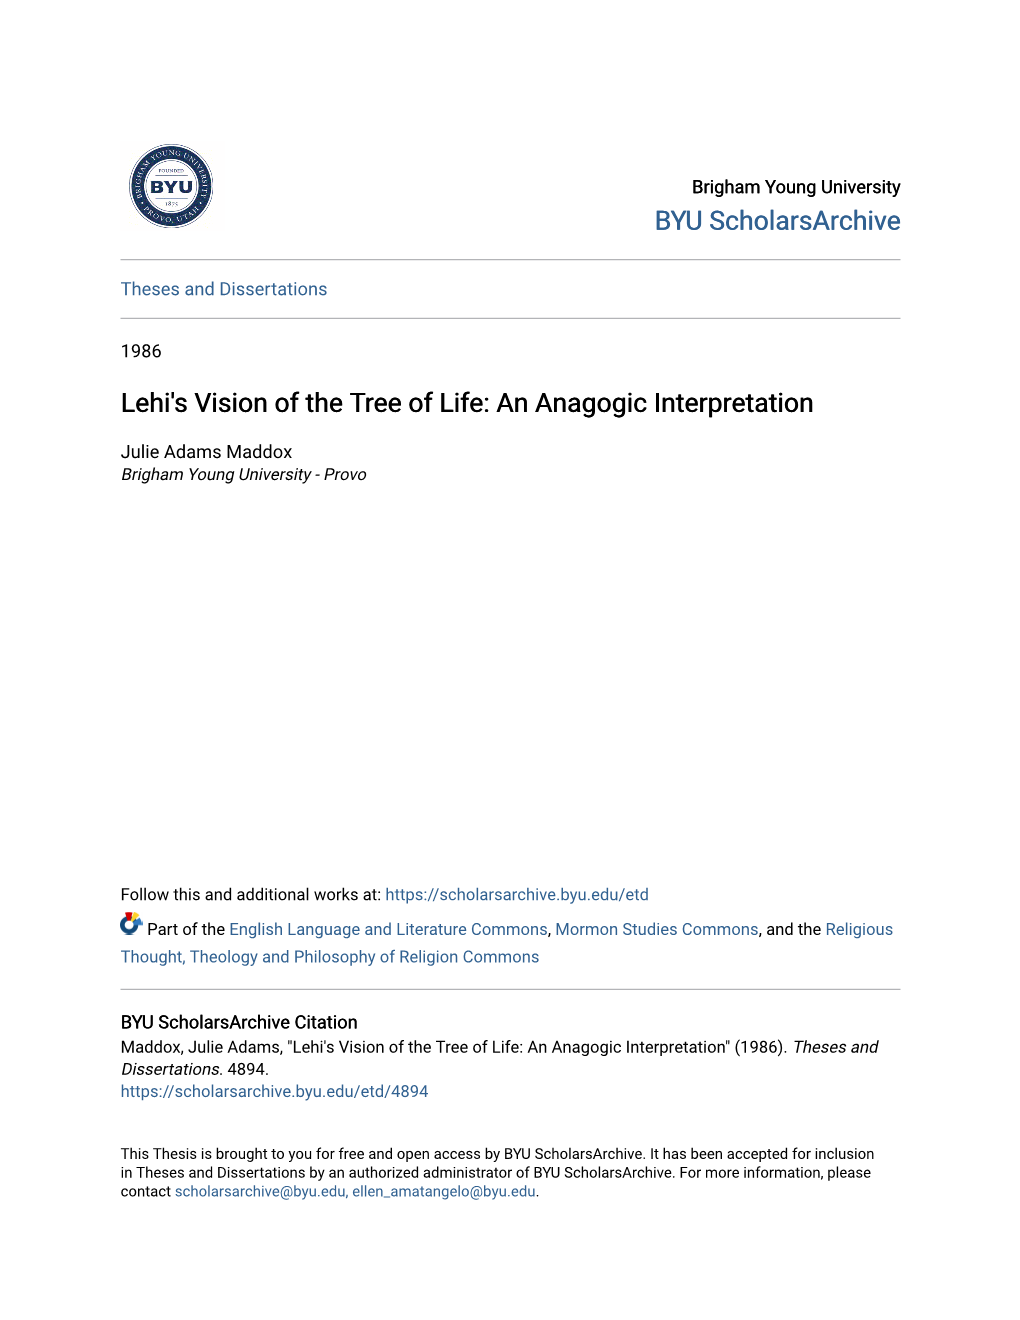 Lehi's Vision of the Tree of Life: an Anagogic Interpretation